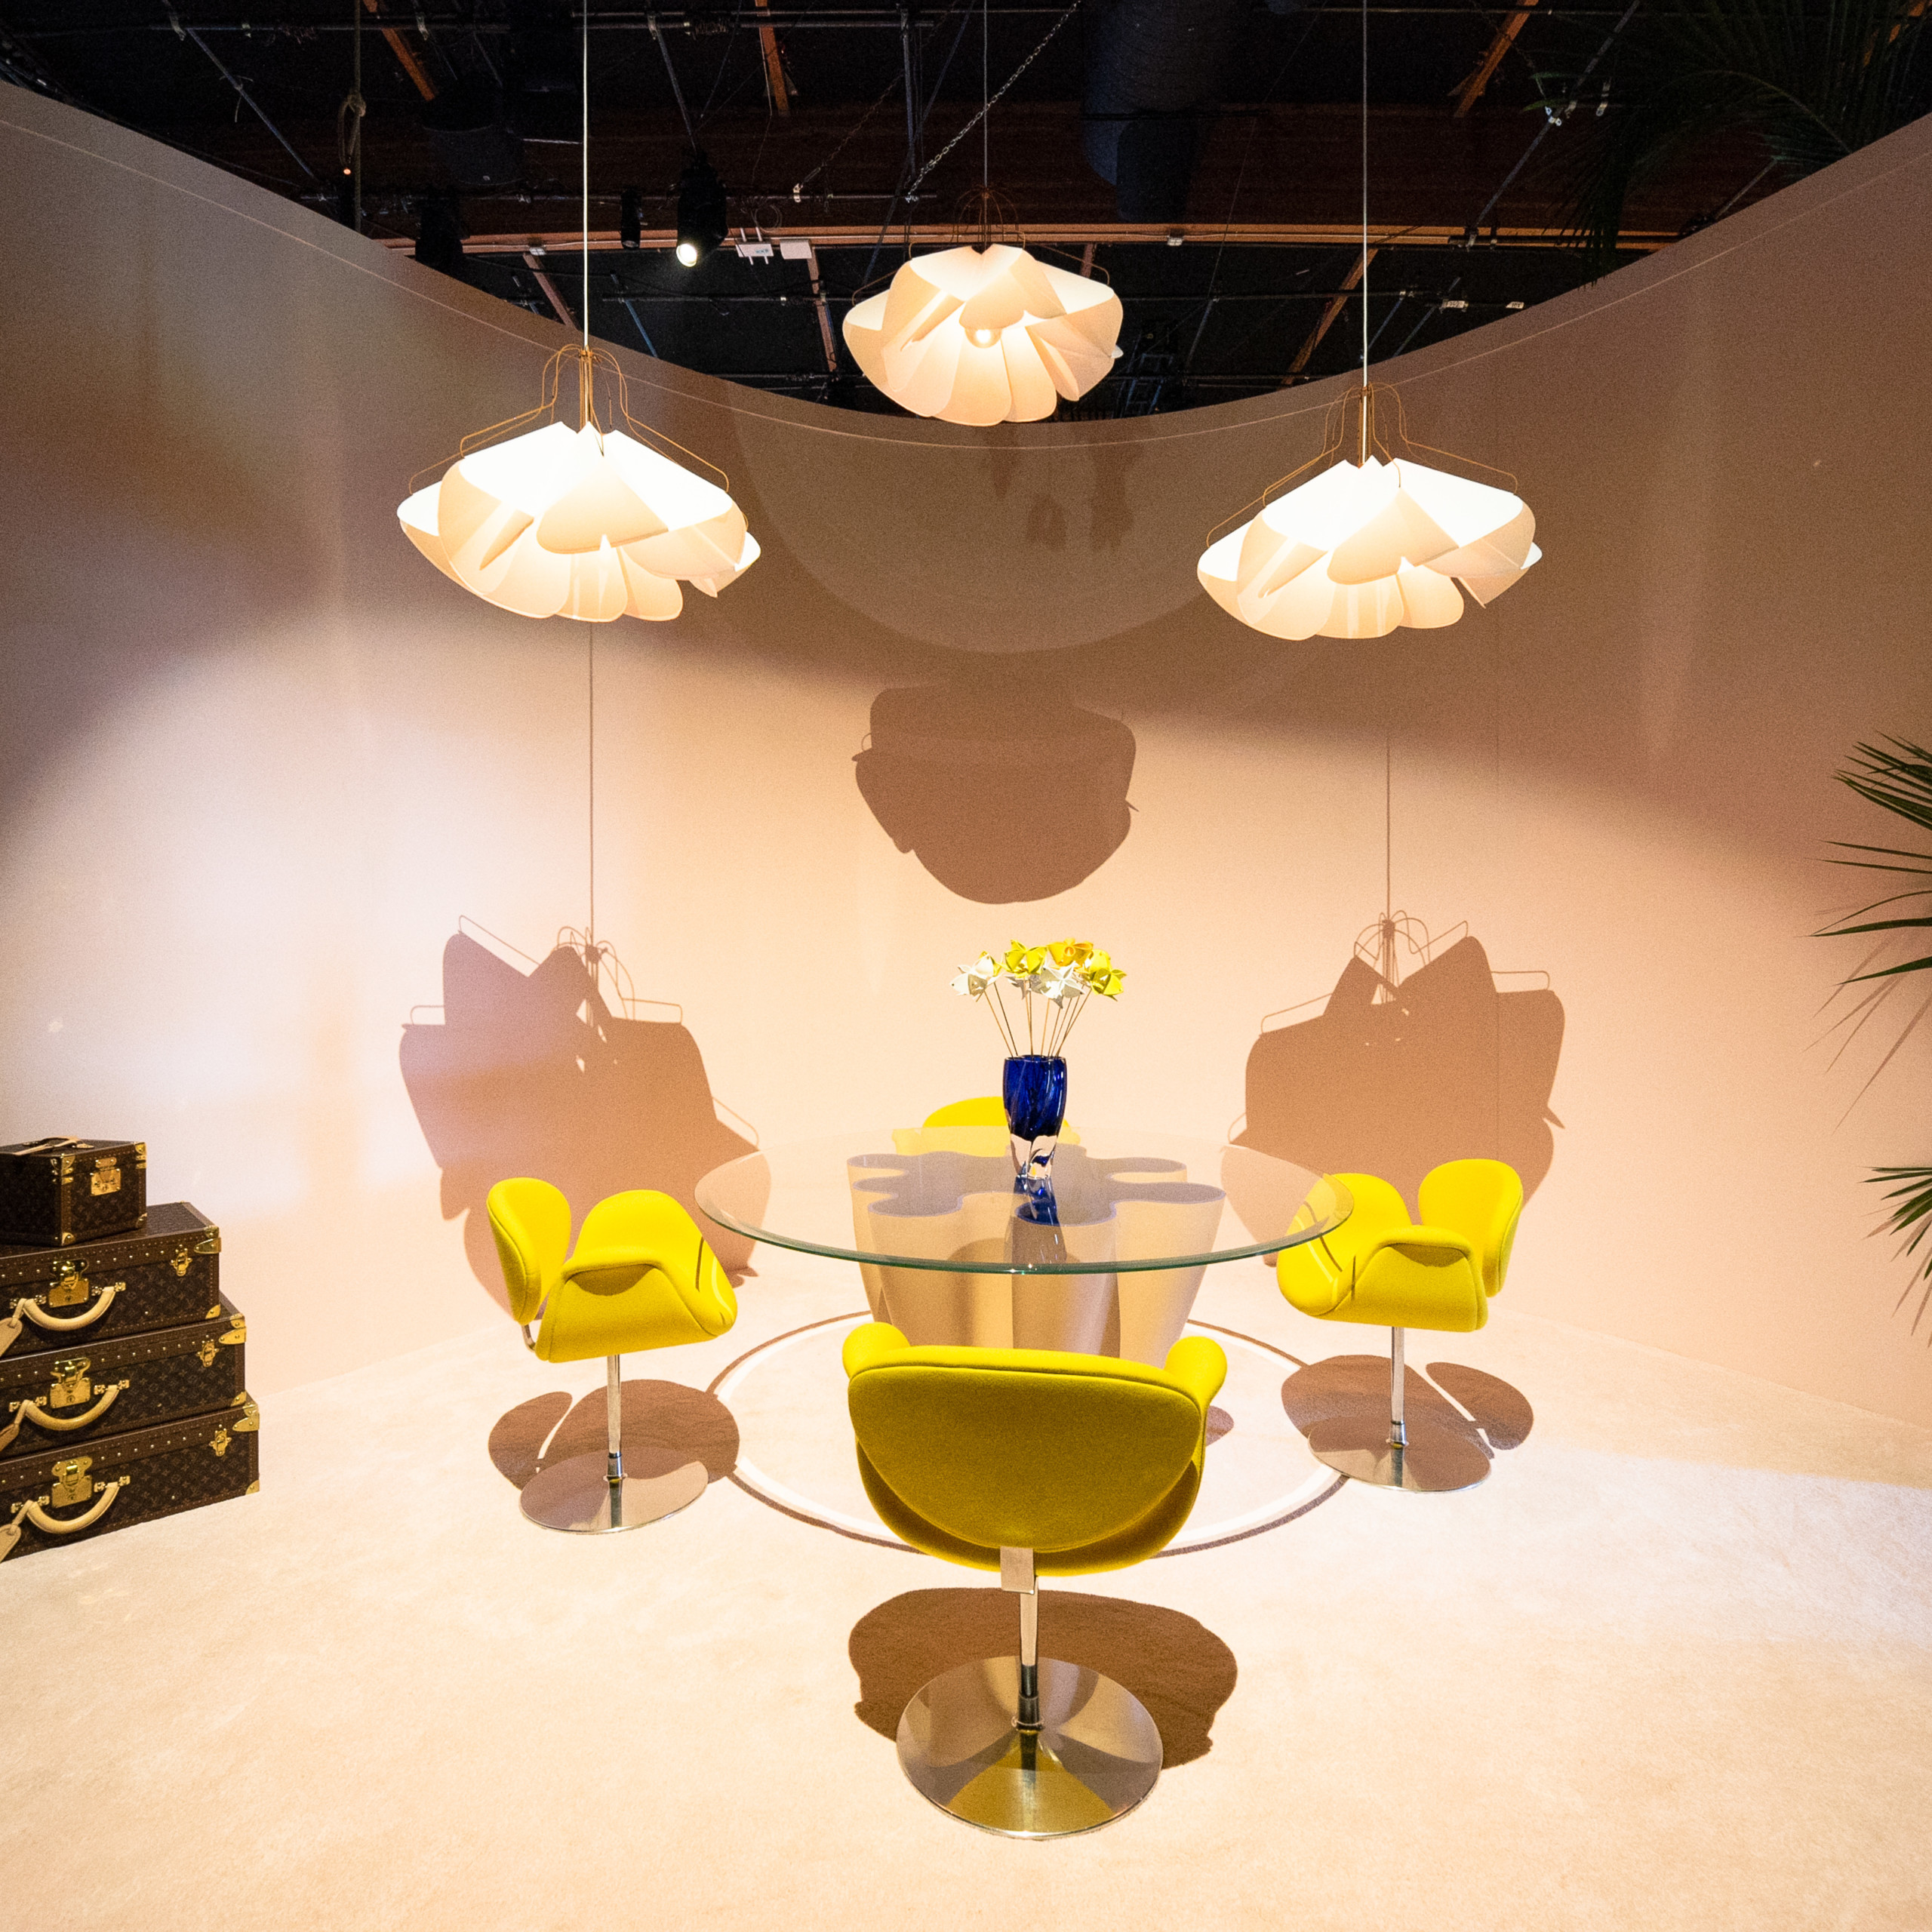 Louis Vuitton on X: At #LouisVuitton's ateliers, savoir-faire can